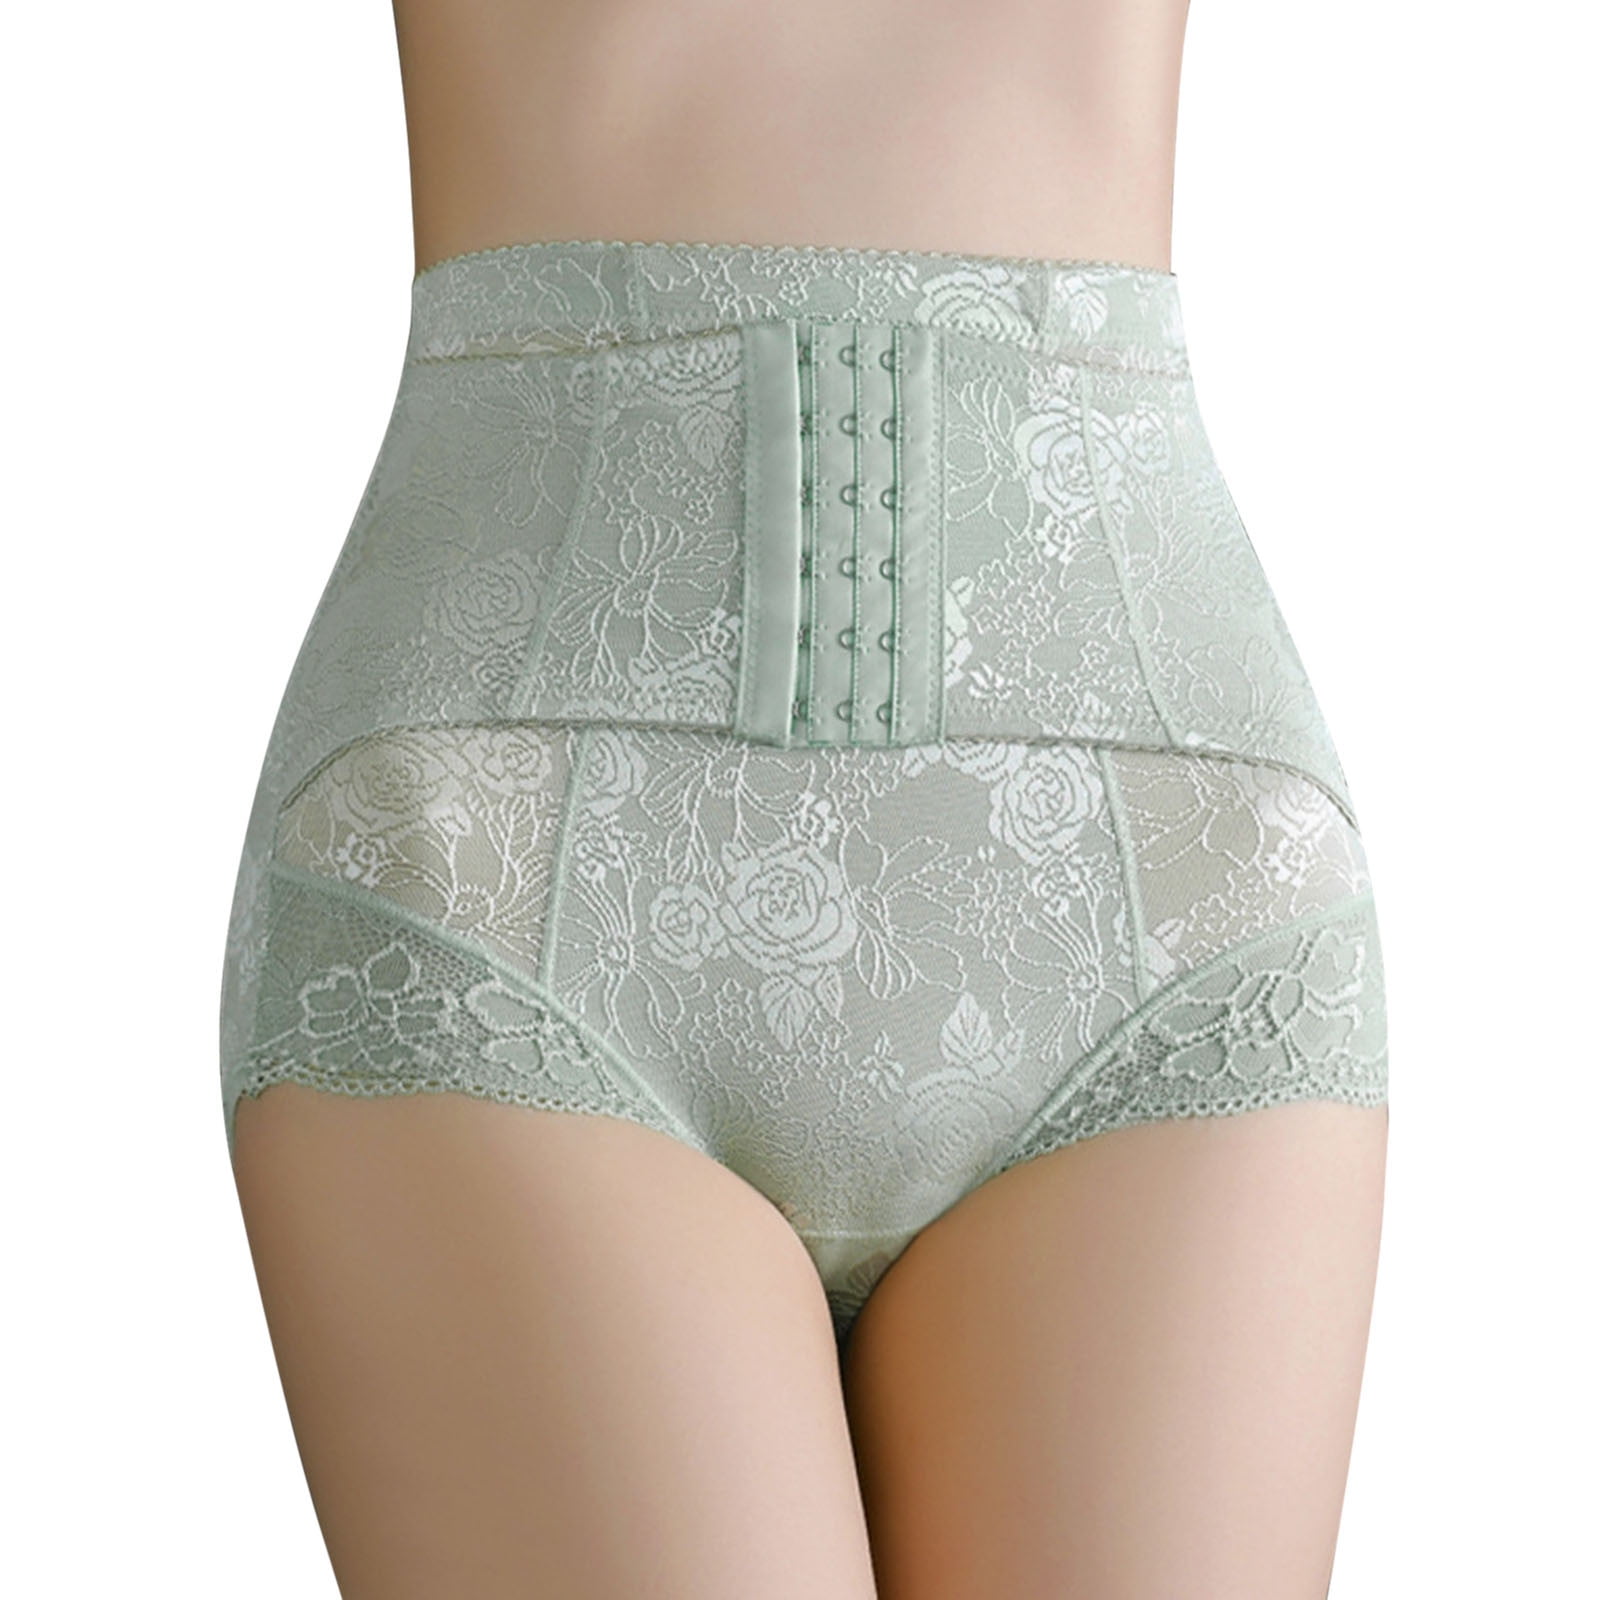 Underwear Corset High Waist Women's Compression Strong Reduce 1 Size  controlbody